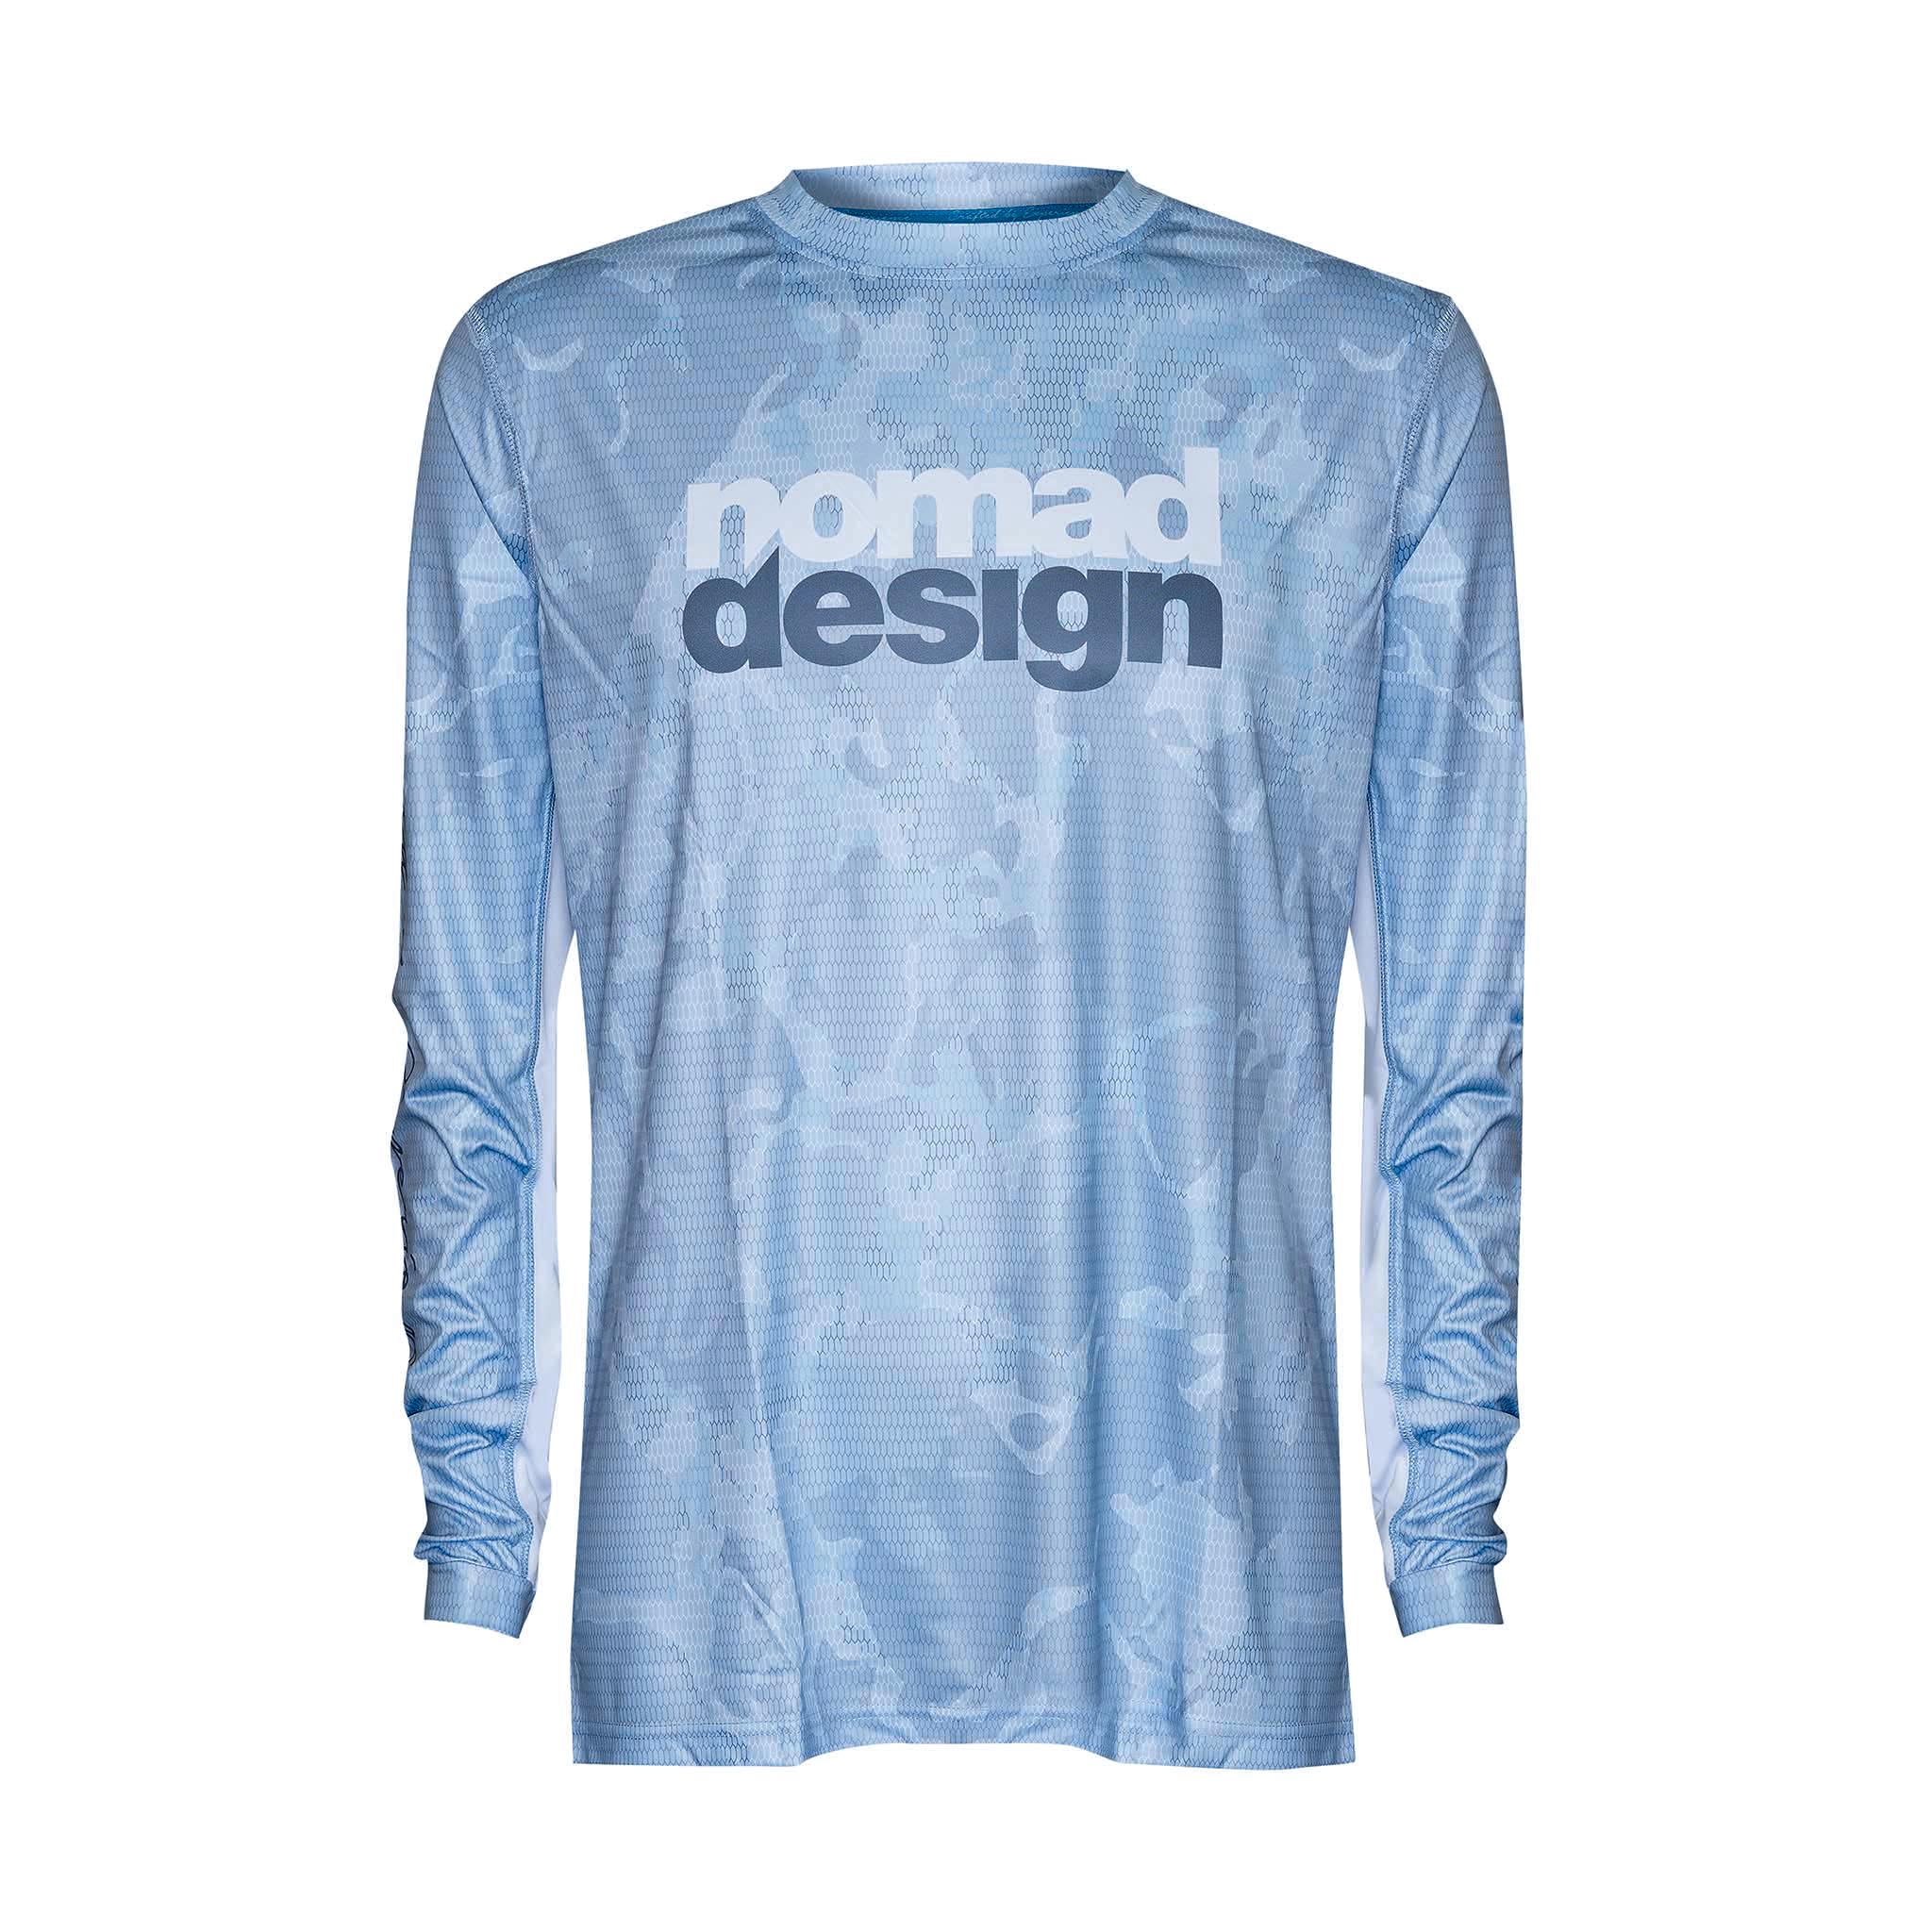 Nomad Design Collared Tech Fishing Shirt